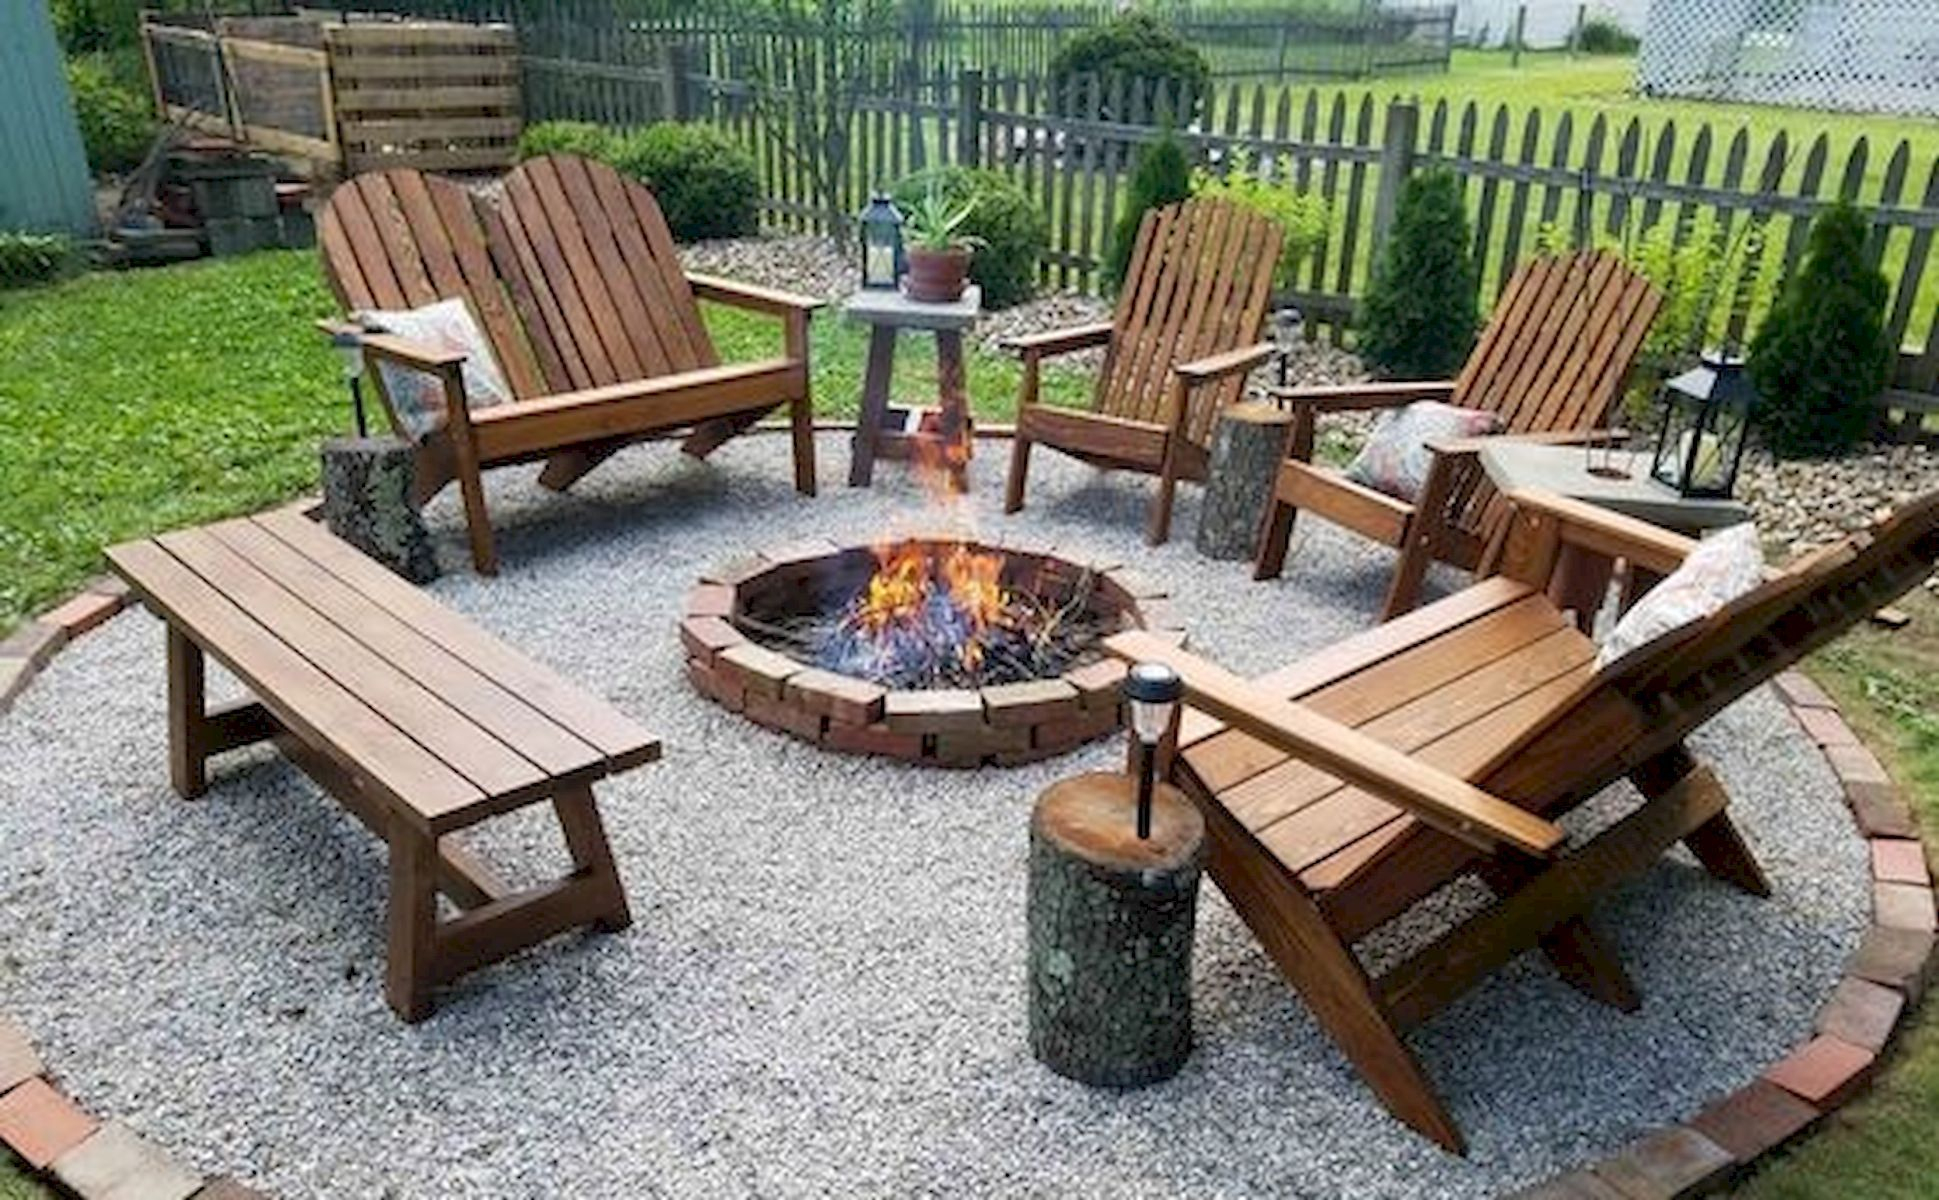 50 Magical Outdoor Fire Pit Design Ideas | Foyer Jardin ... dedans Foyer De Jardin Exterieur